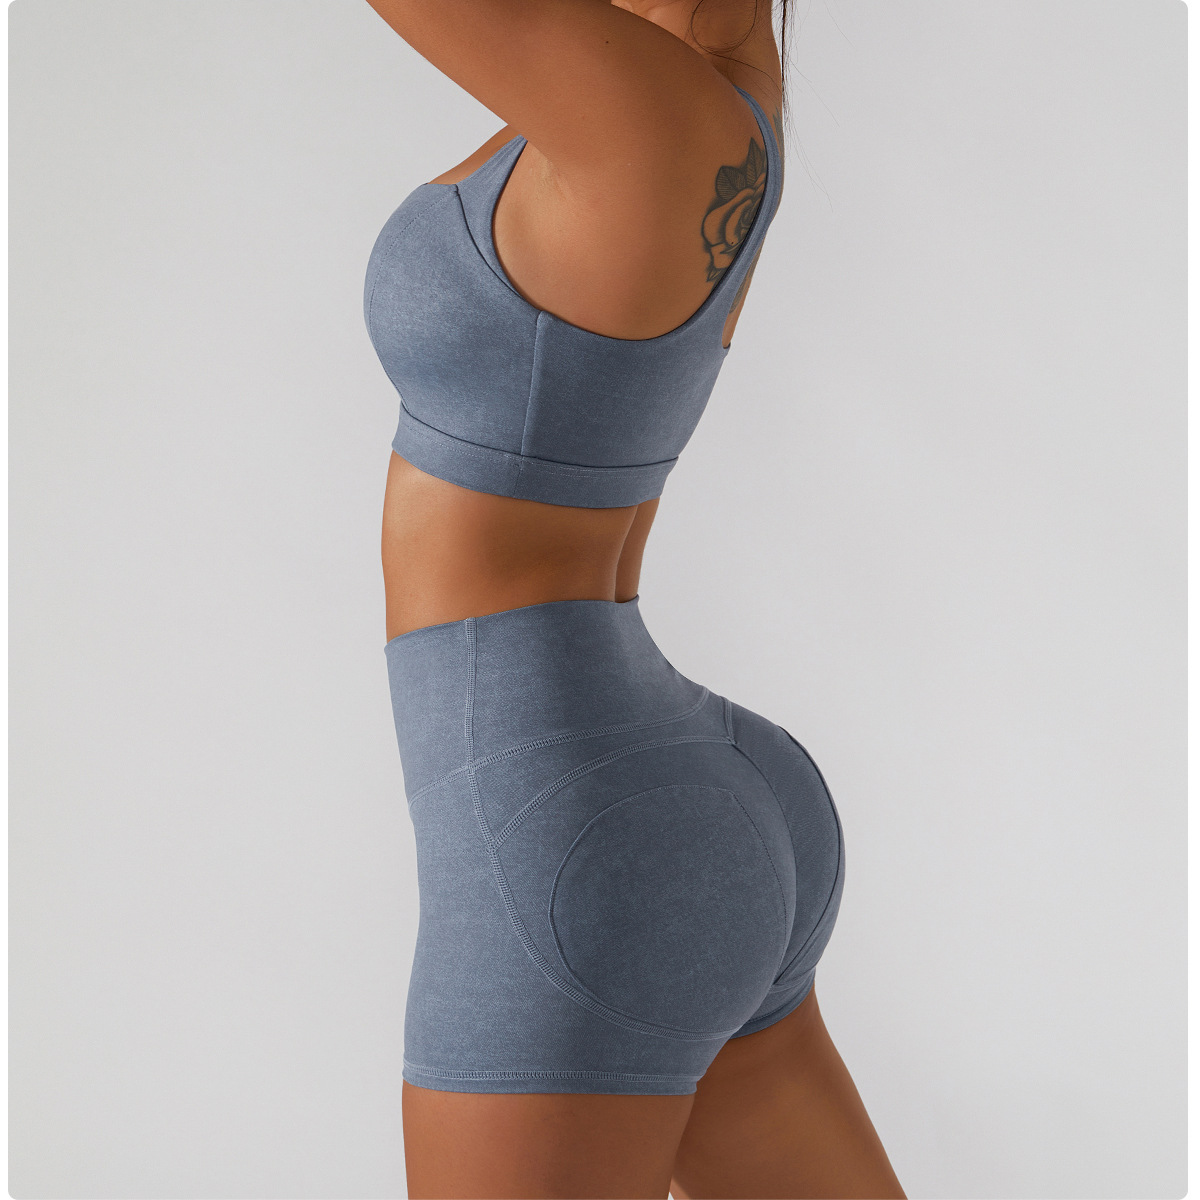 Yoga shockproof beautiful back sports underwear female running